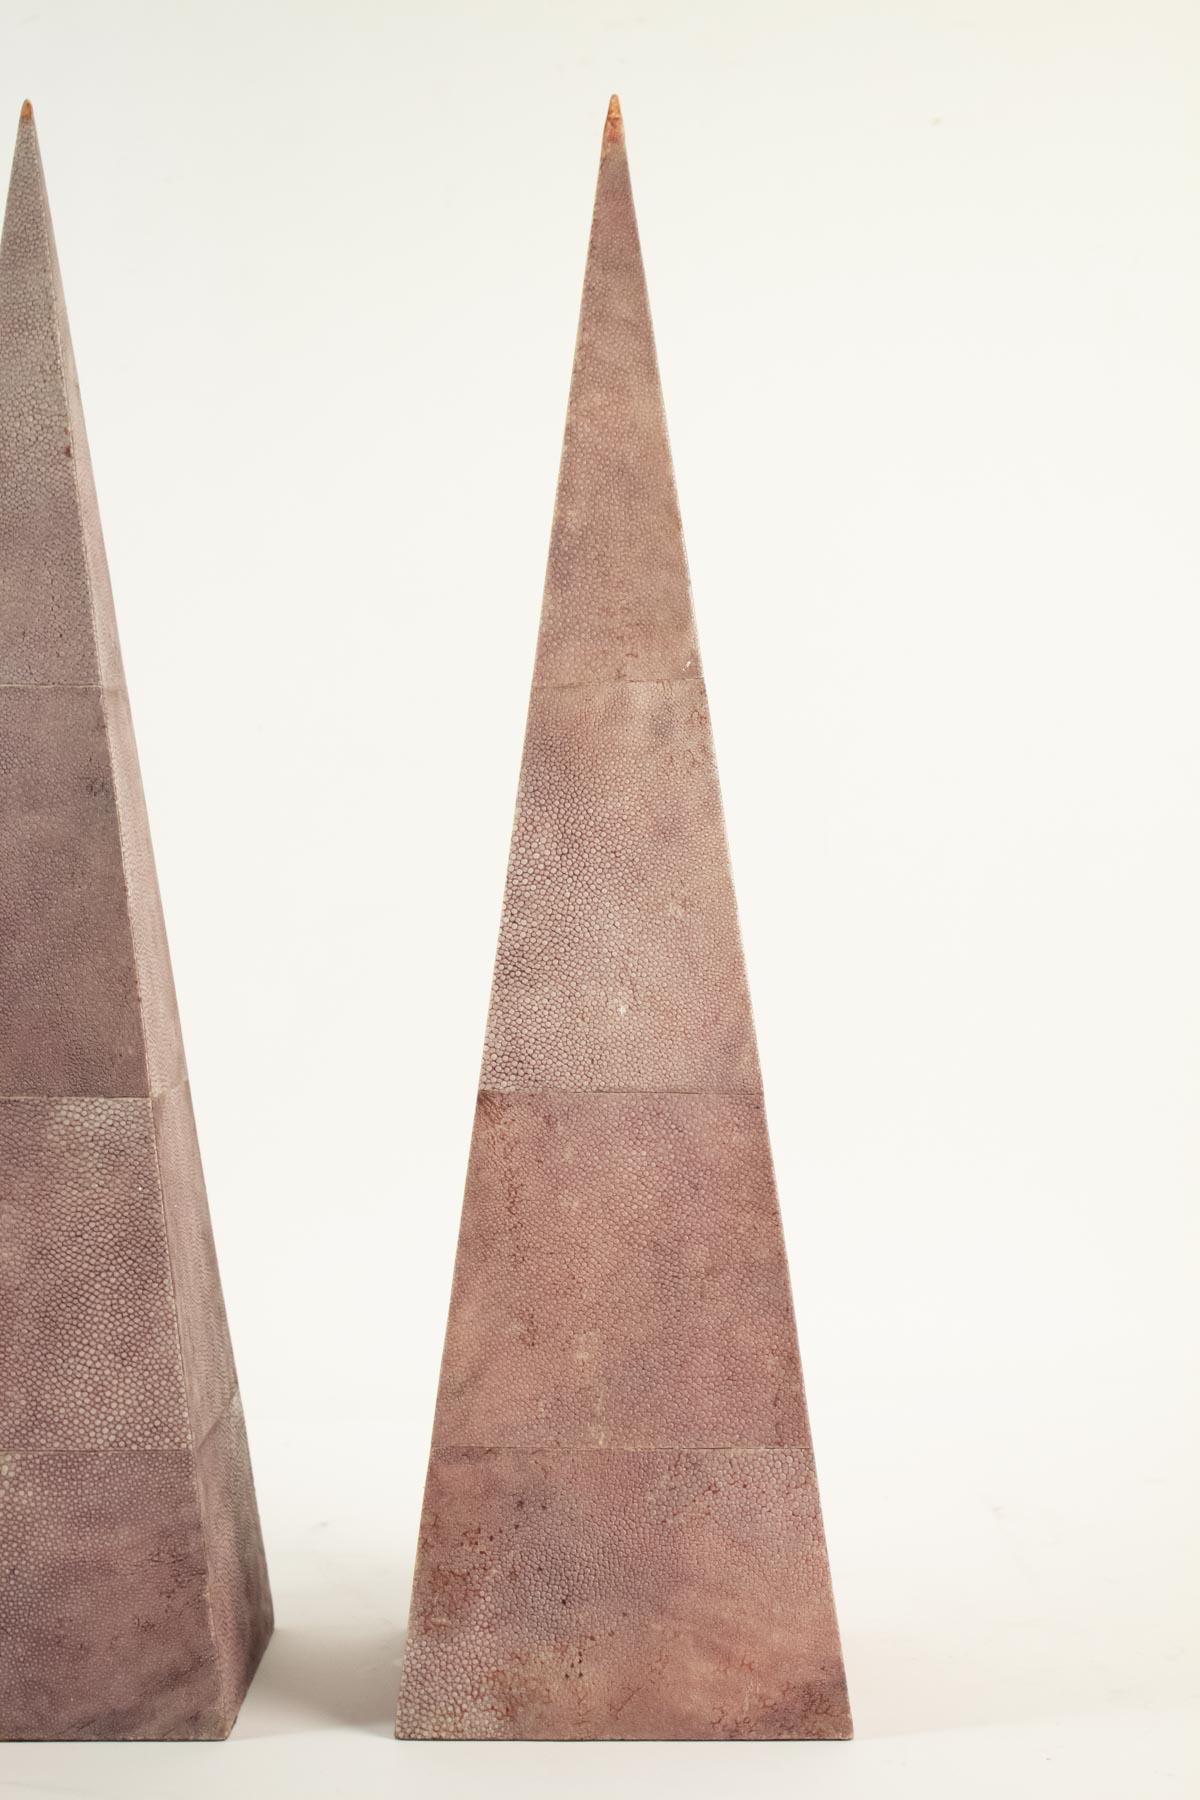 Pair of pyramids sheathed shagreen, 20th century.
Measures: H 60.5cm, W 16cm, W 16cm.